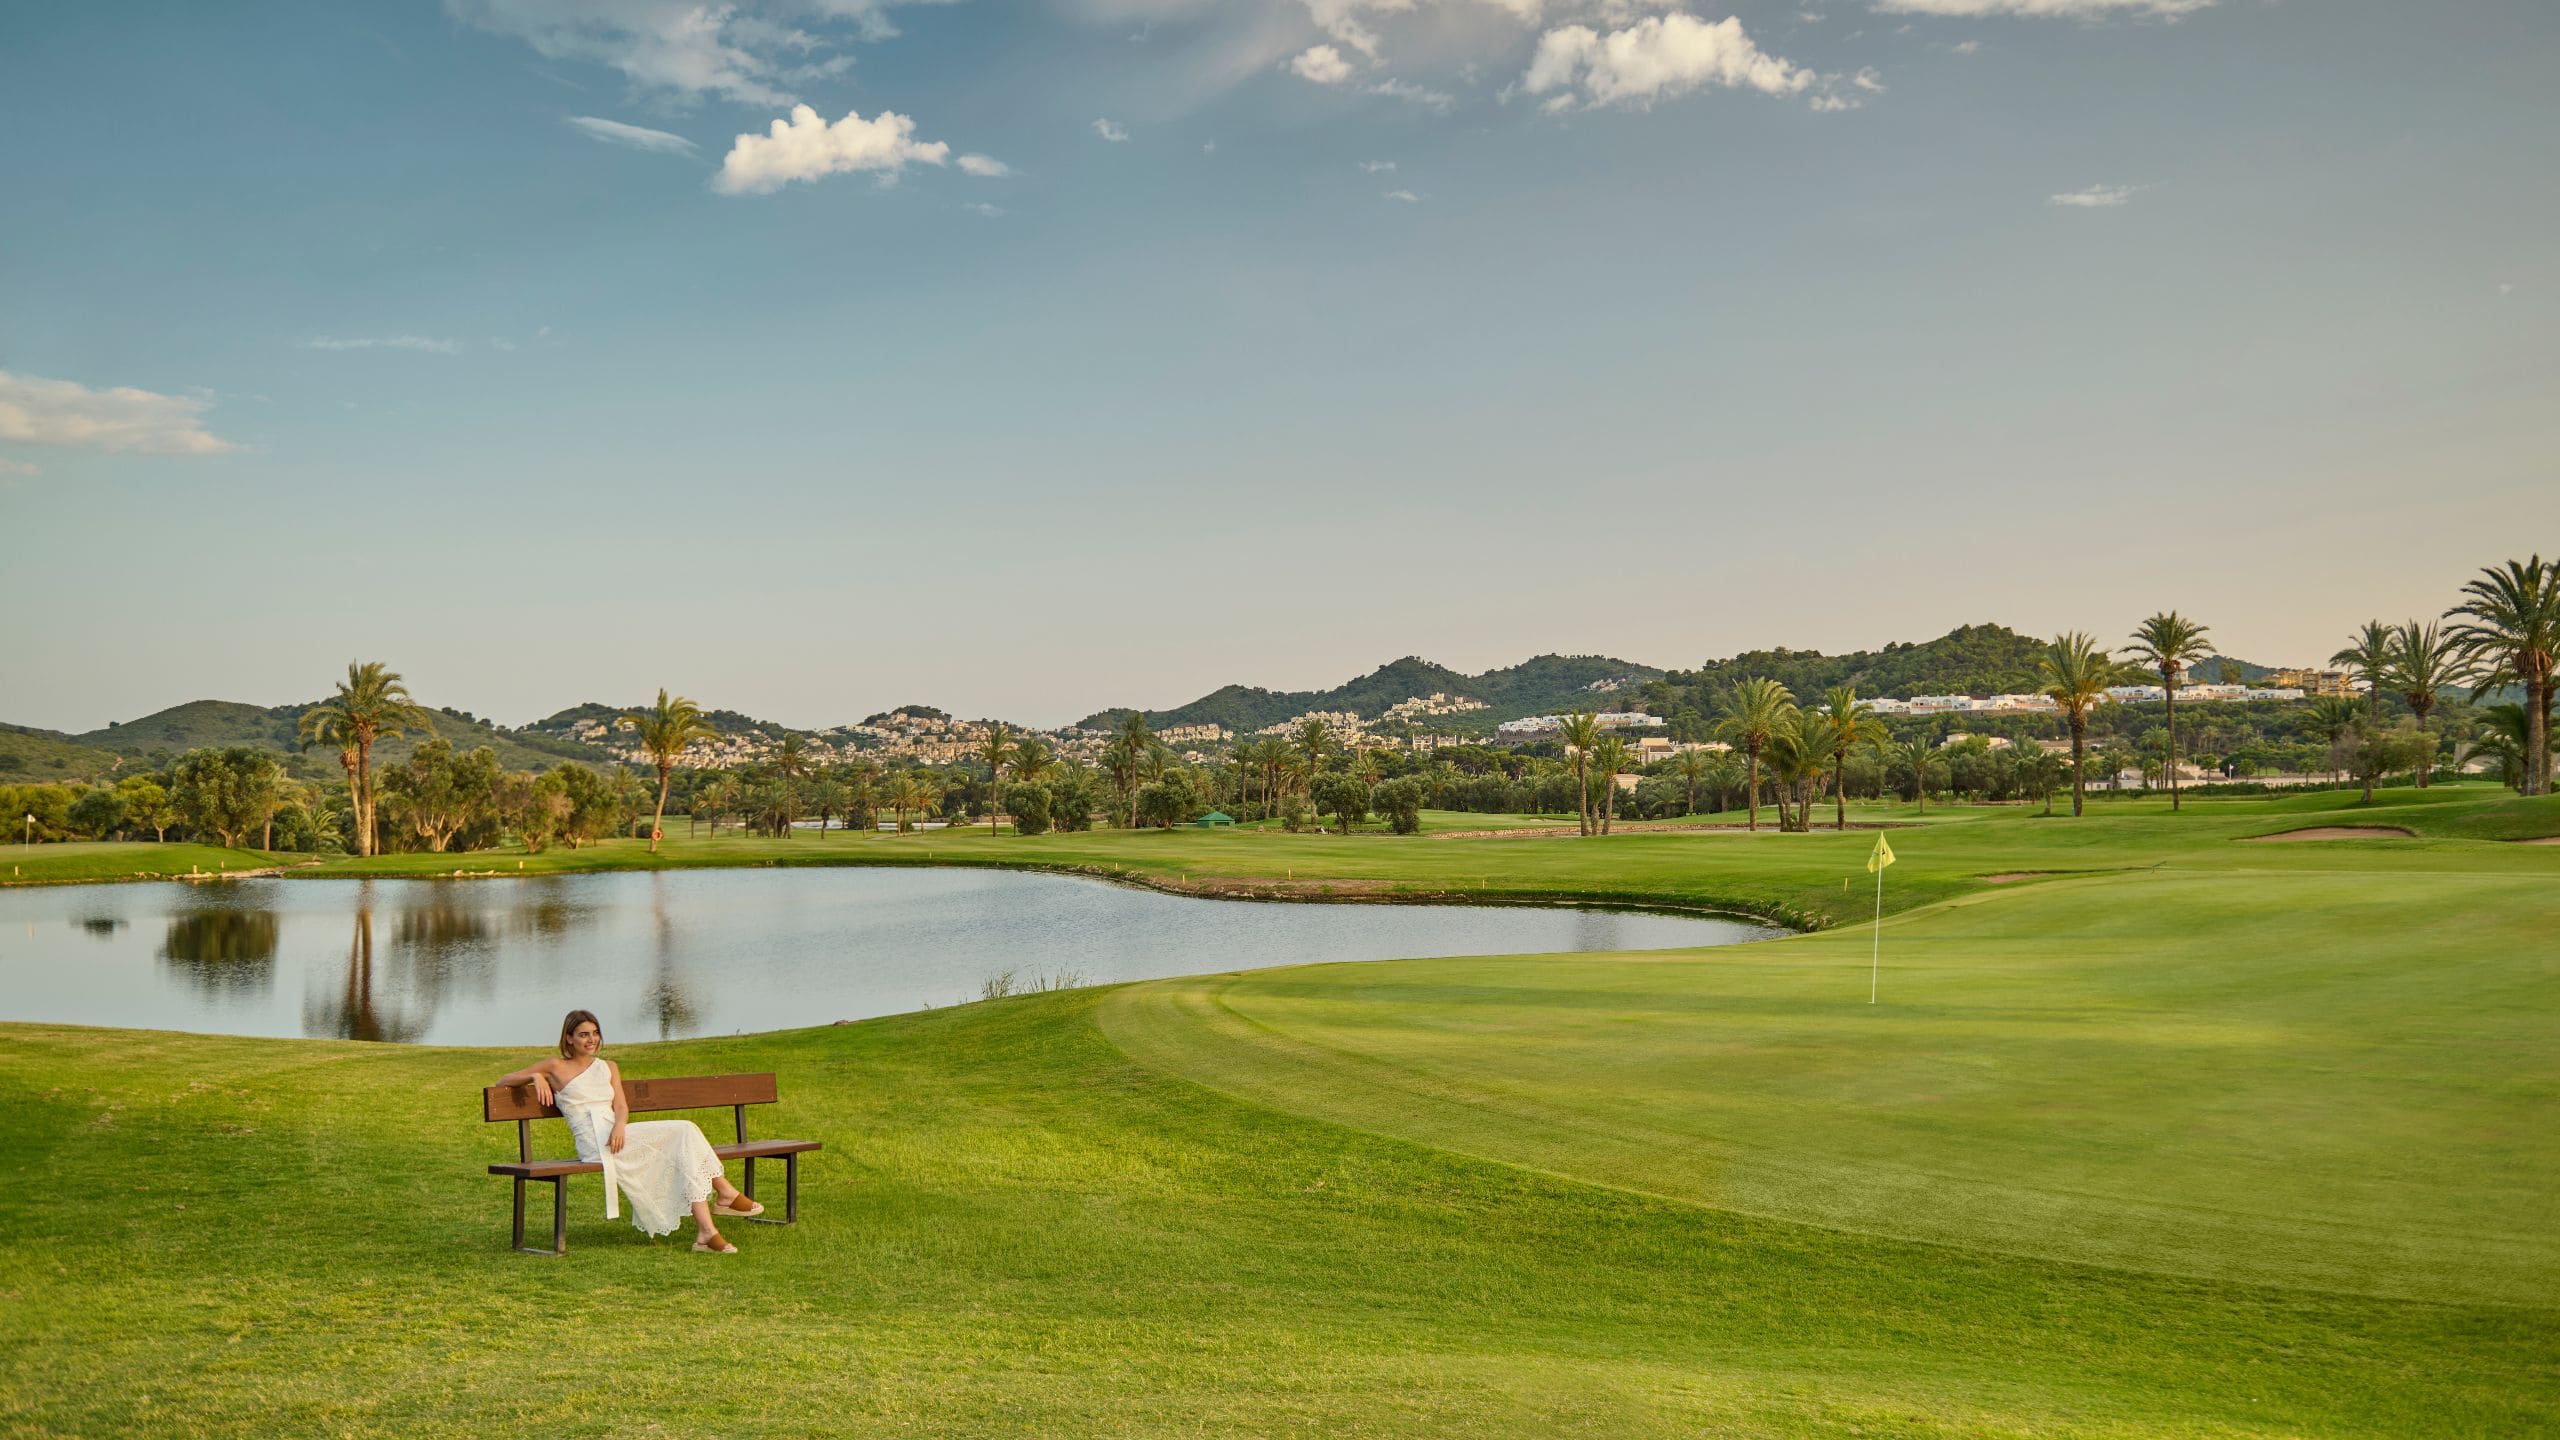 Grand Hyatt La Manga Club Golf & Spa Guest Golf Course Bench